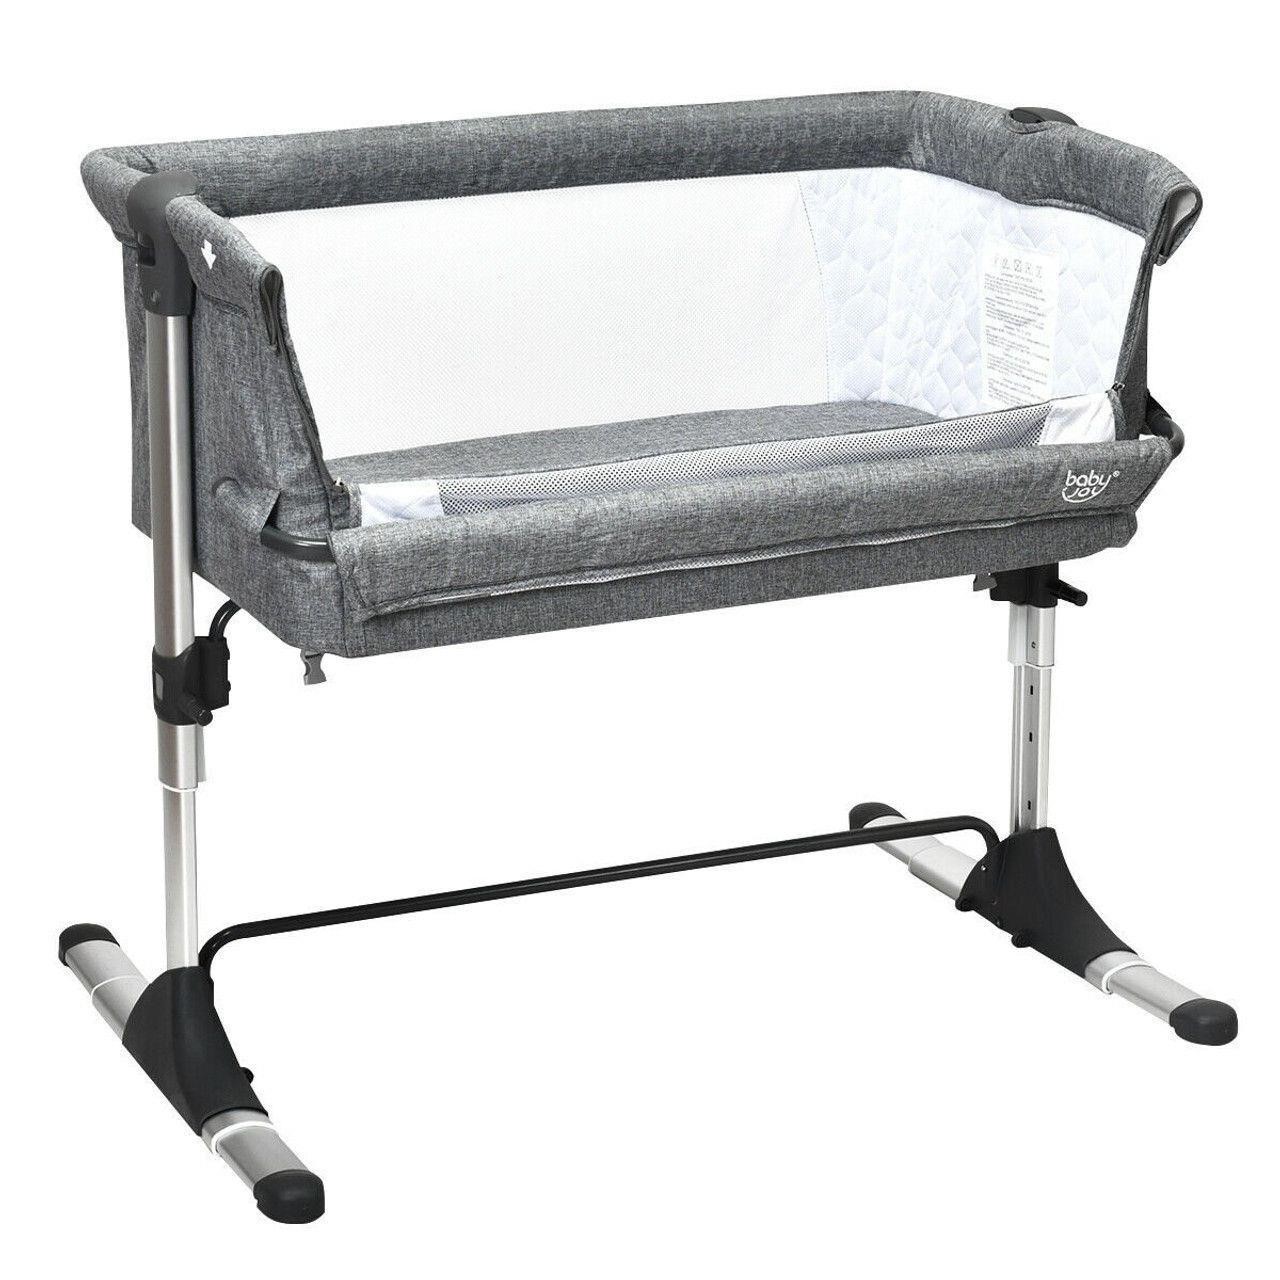 Portable Baby Bed Travel Bassinet Crib Gray